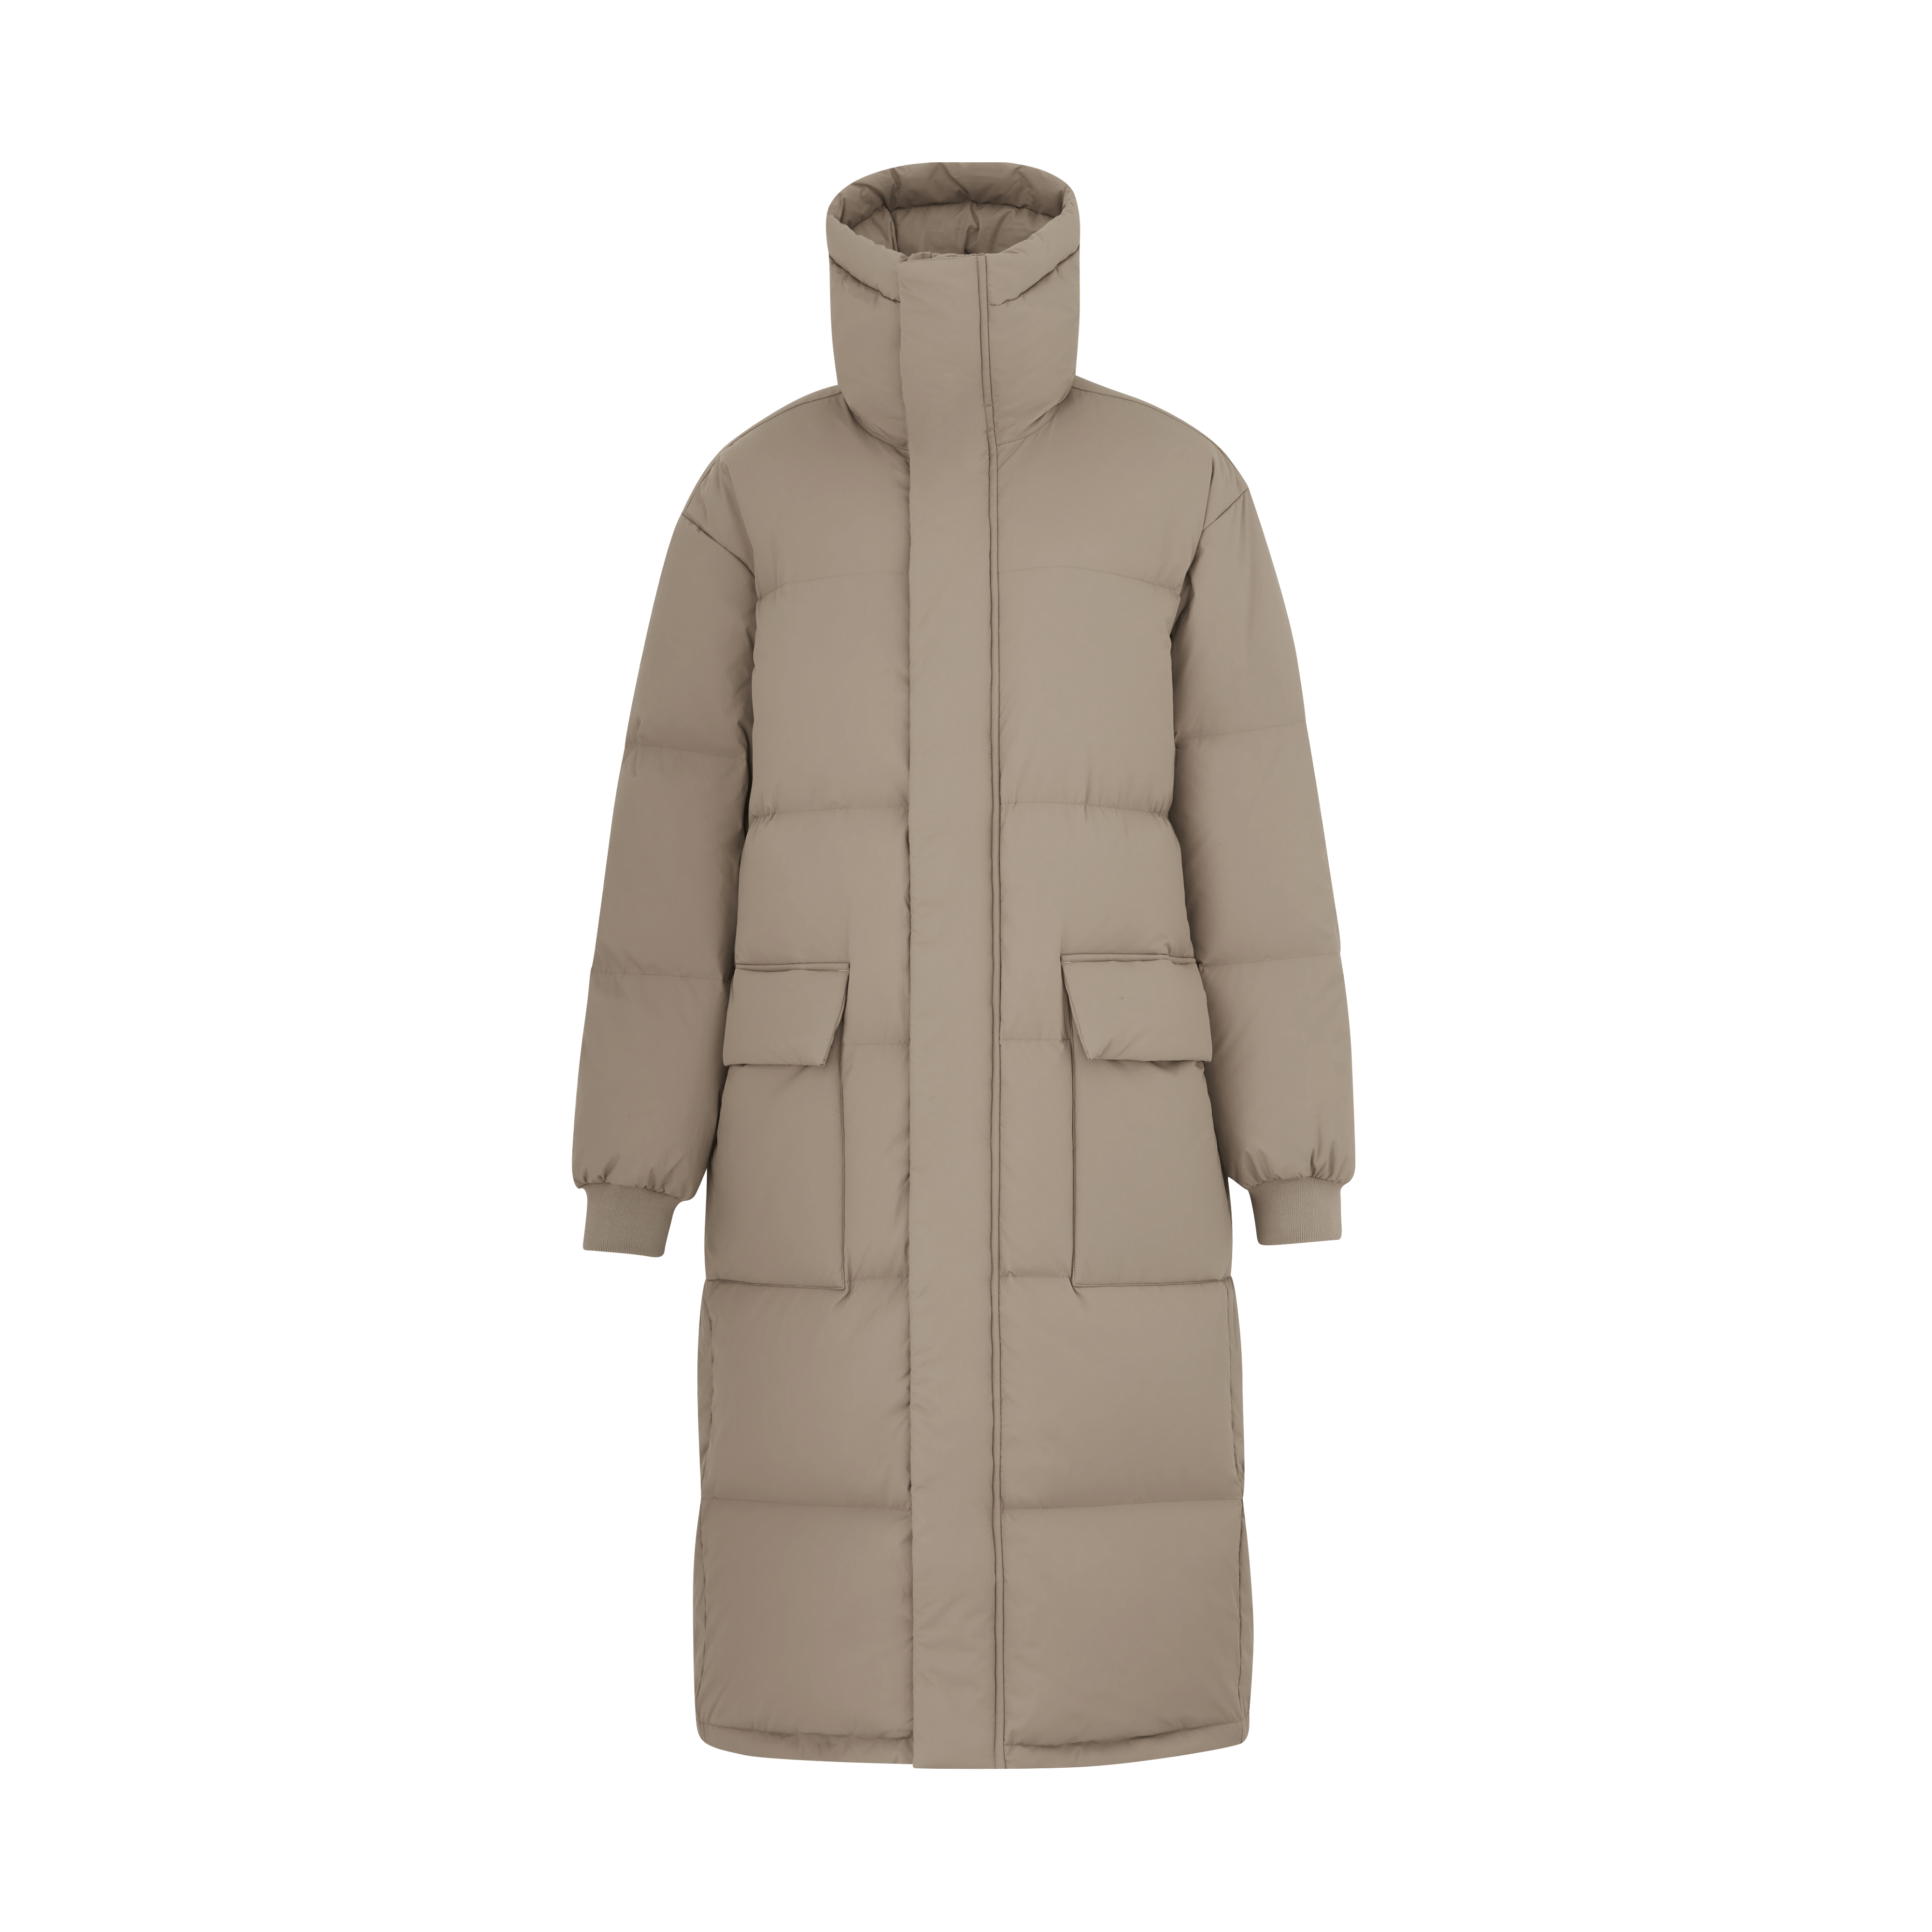 66 North Women's Askja Jackets & Coats